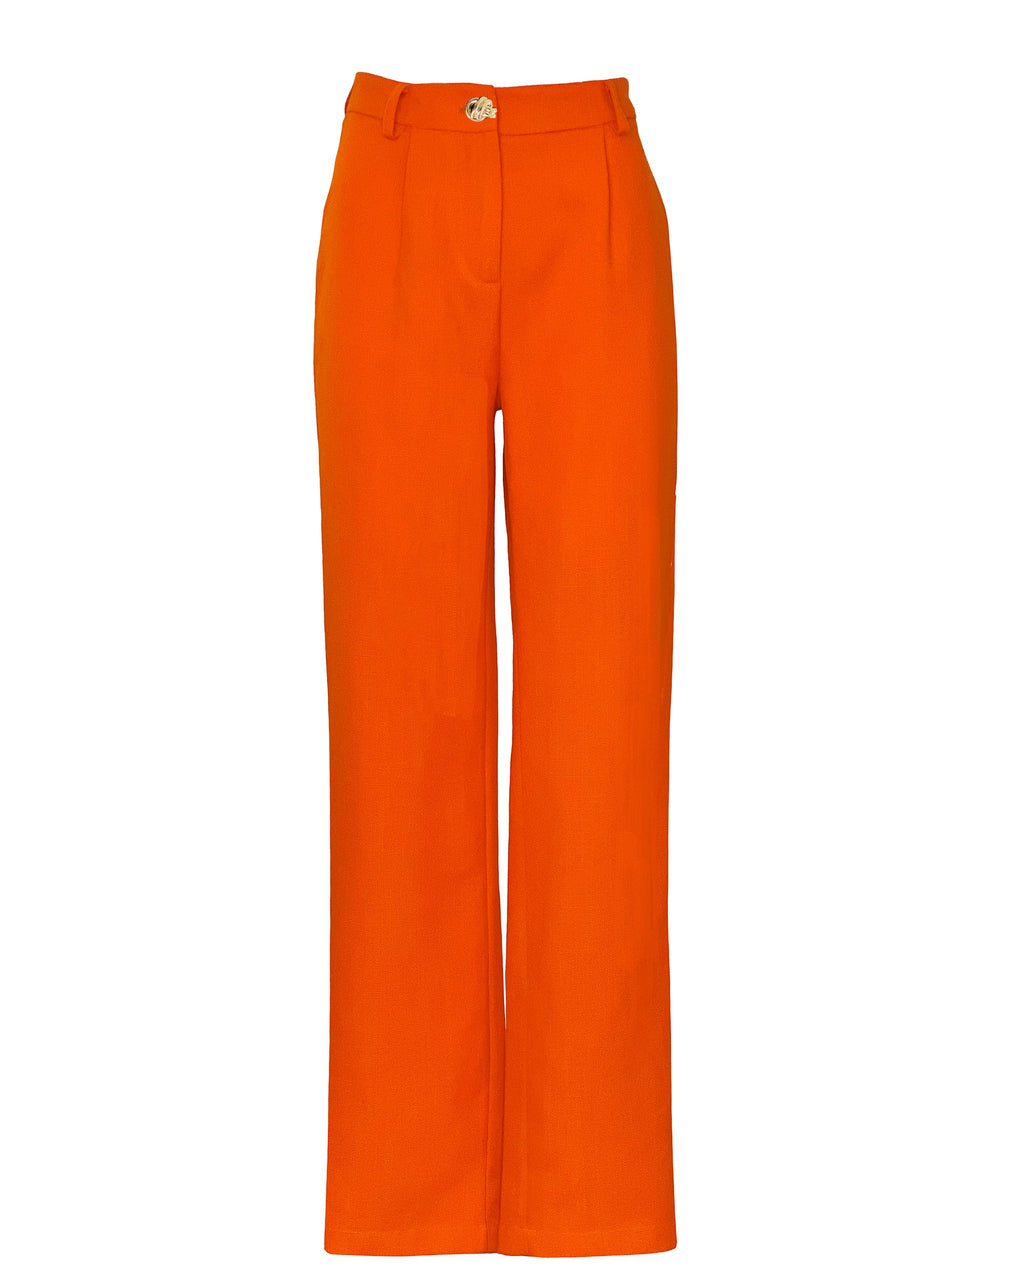 Orange high waisted pants